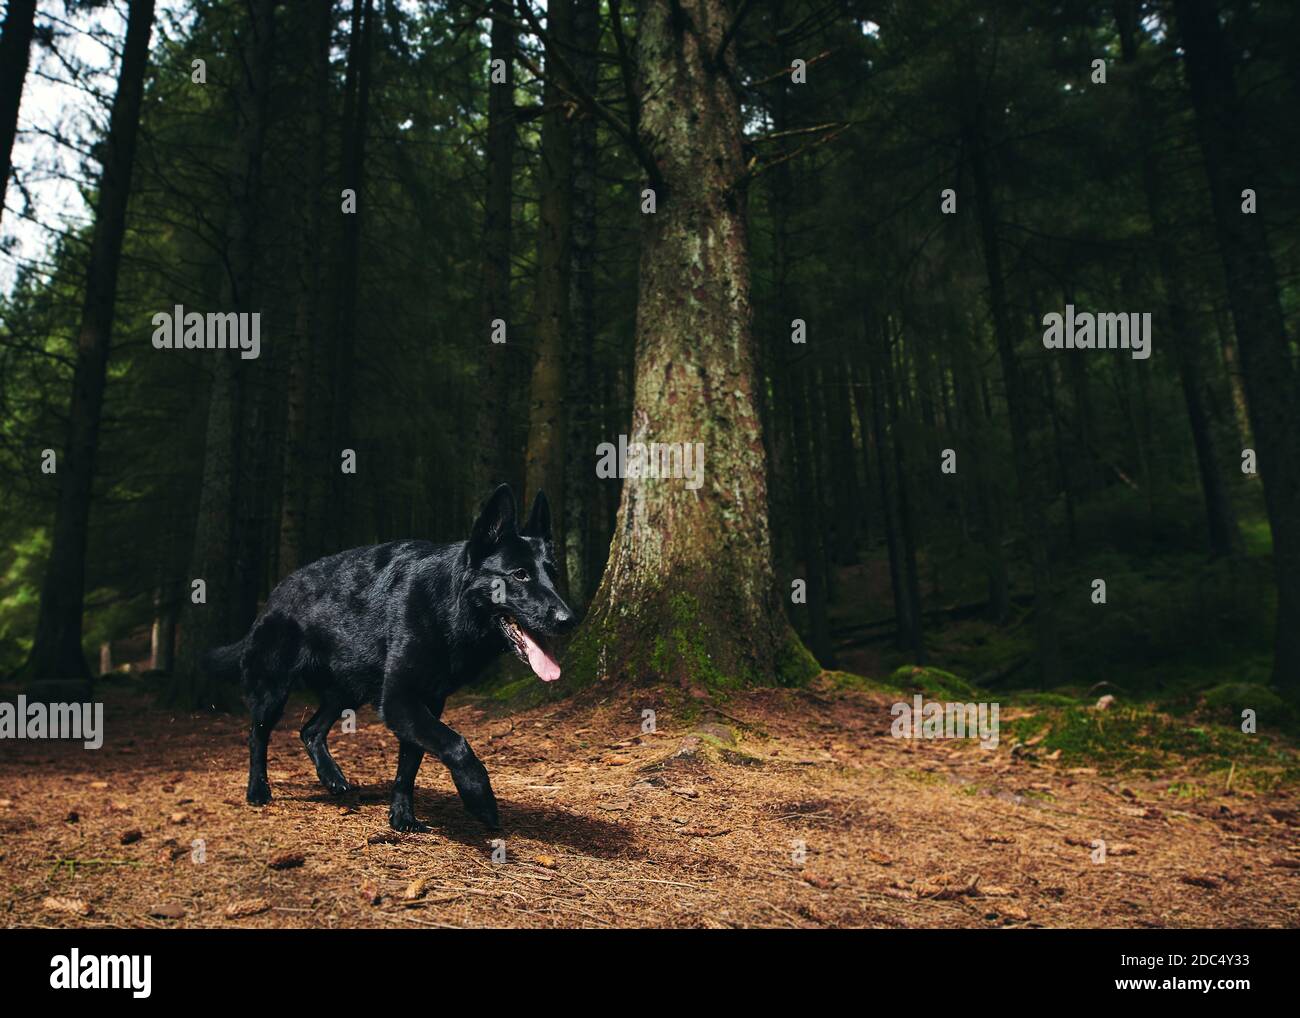 A Black Czech Shepperd walking through a forest on it's own Stock Photo